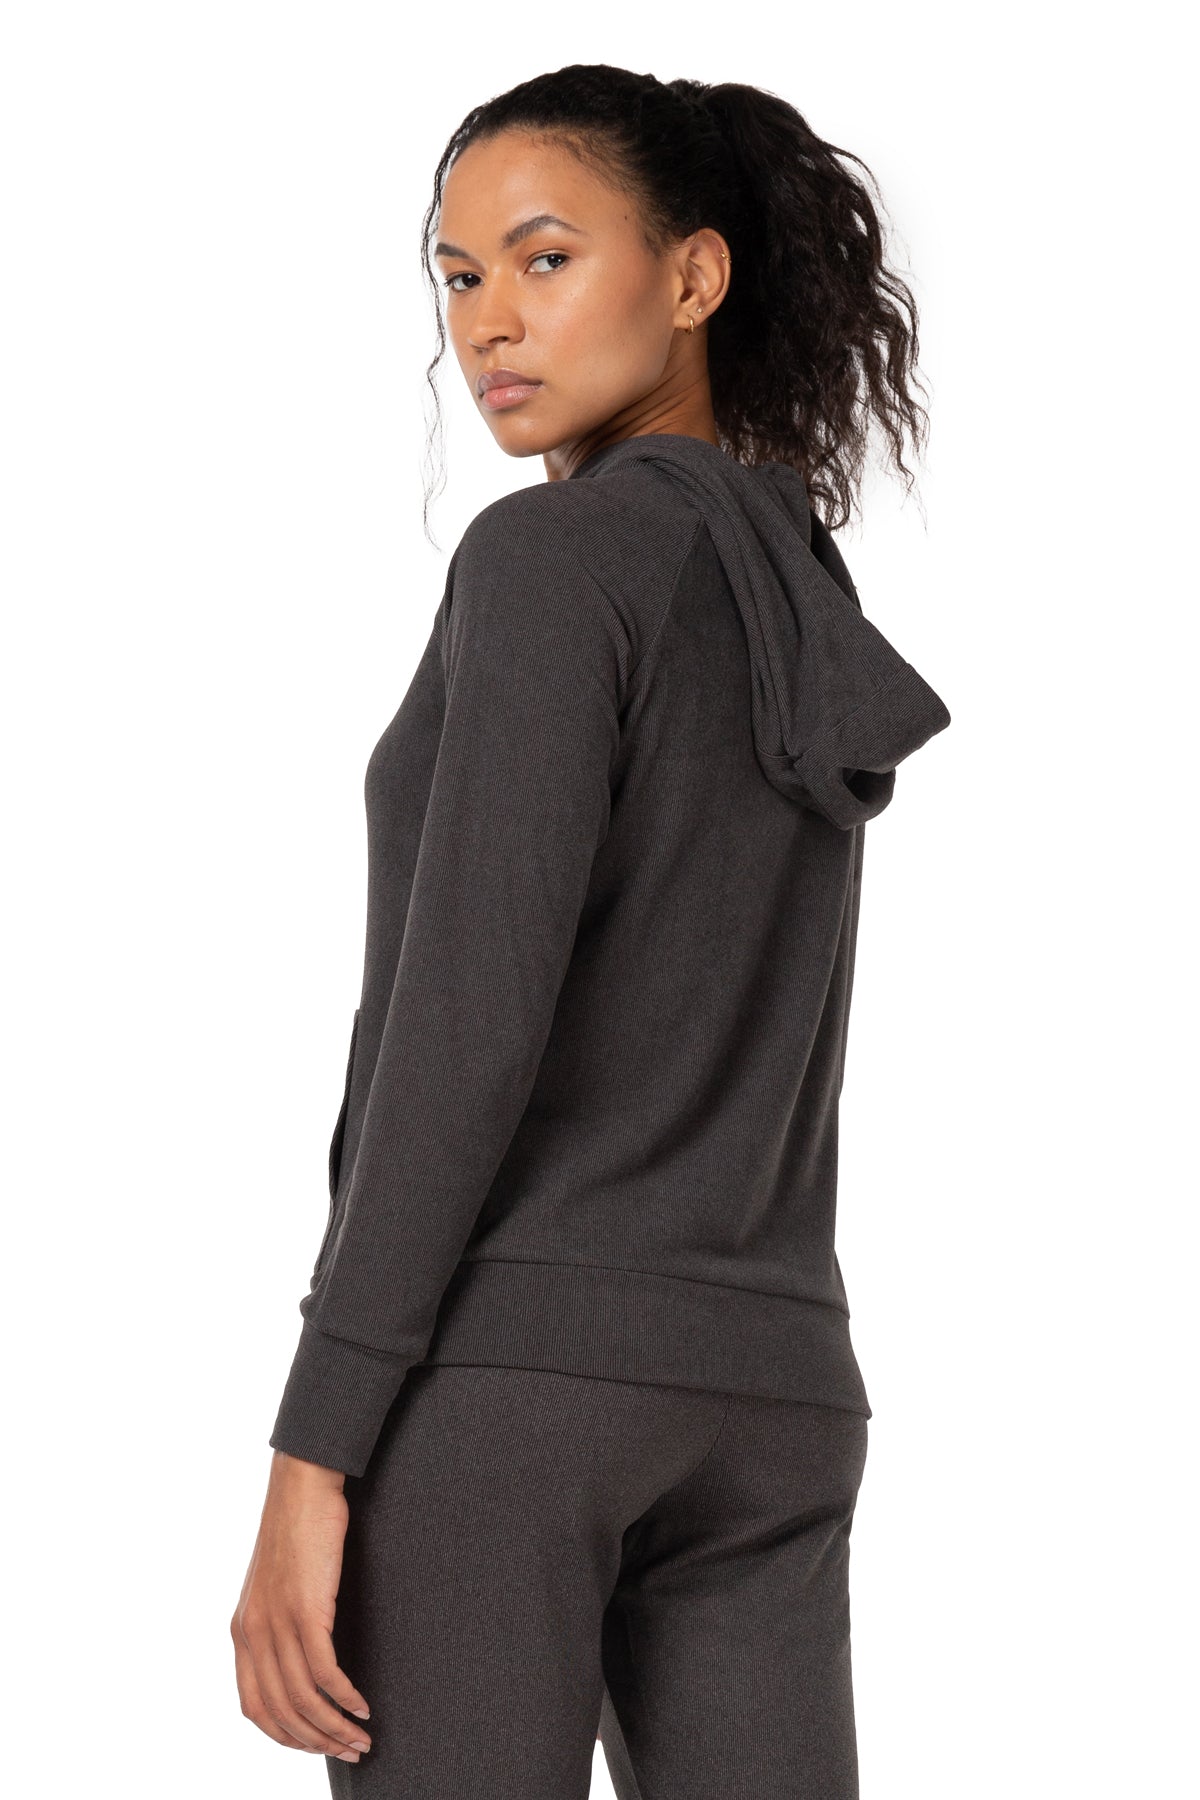 Kyodan Outdoor Pullover Sweatshirt Women Gray Medium Chest 35 Length 24.5